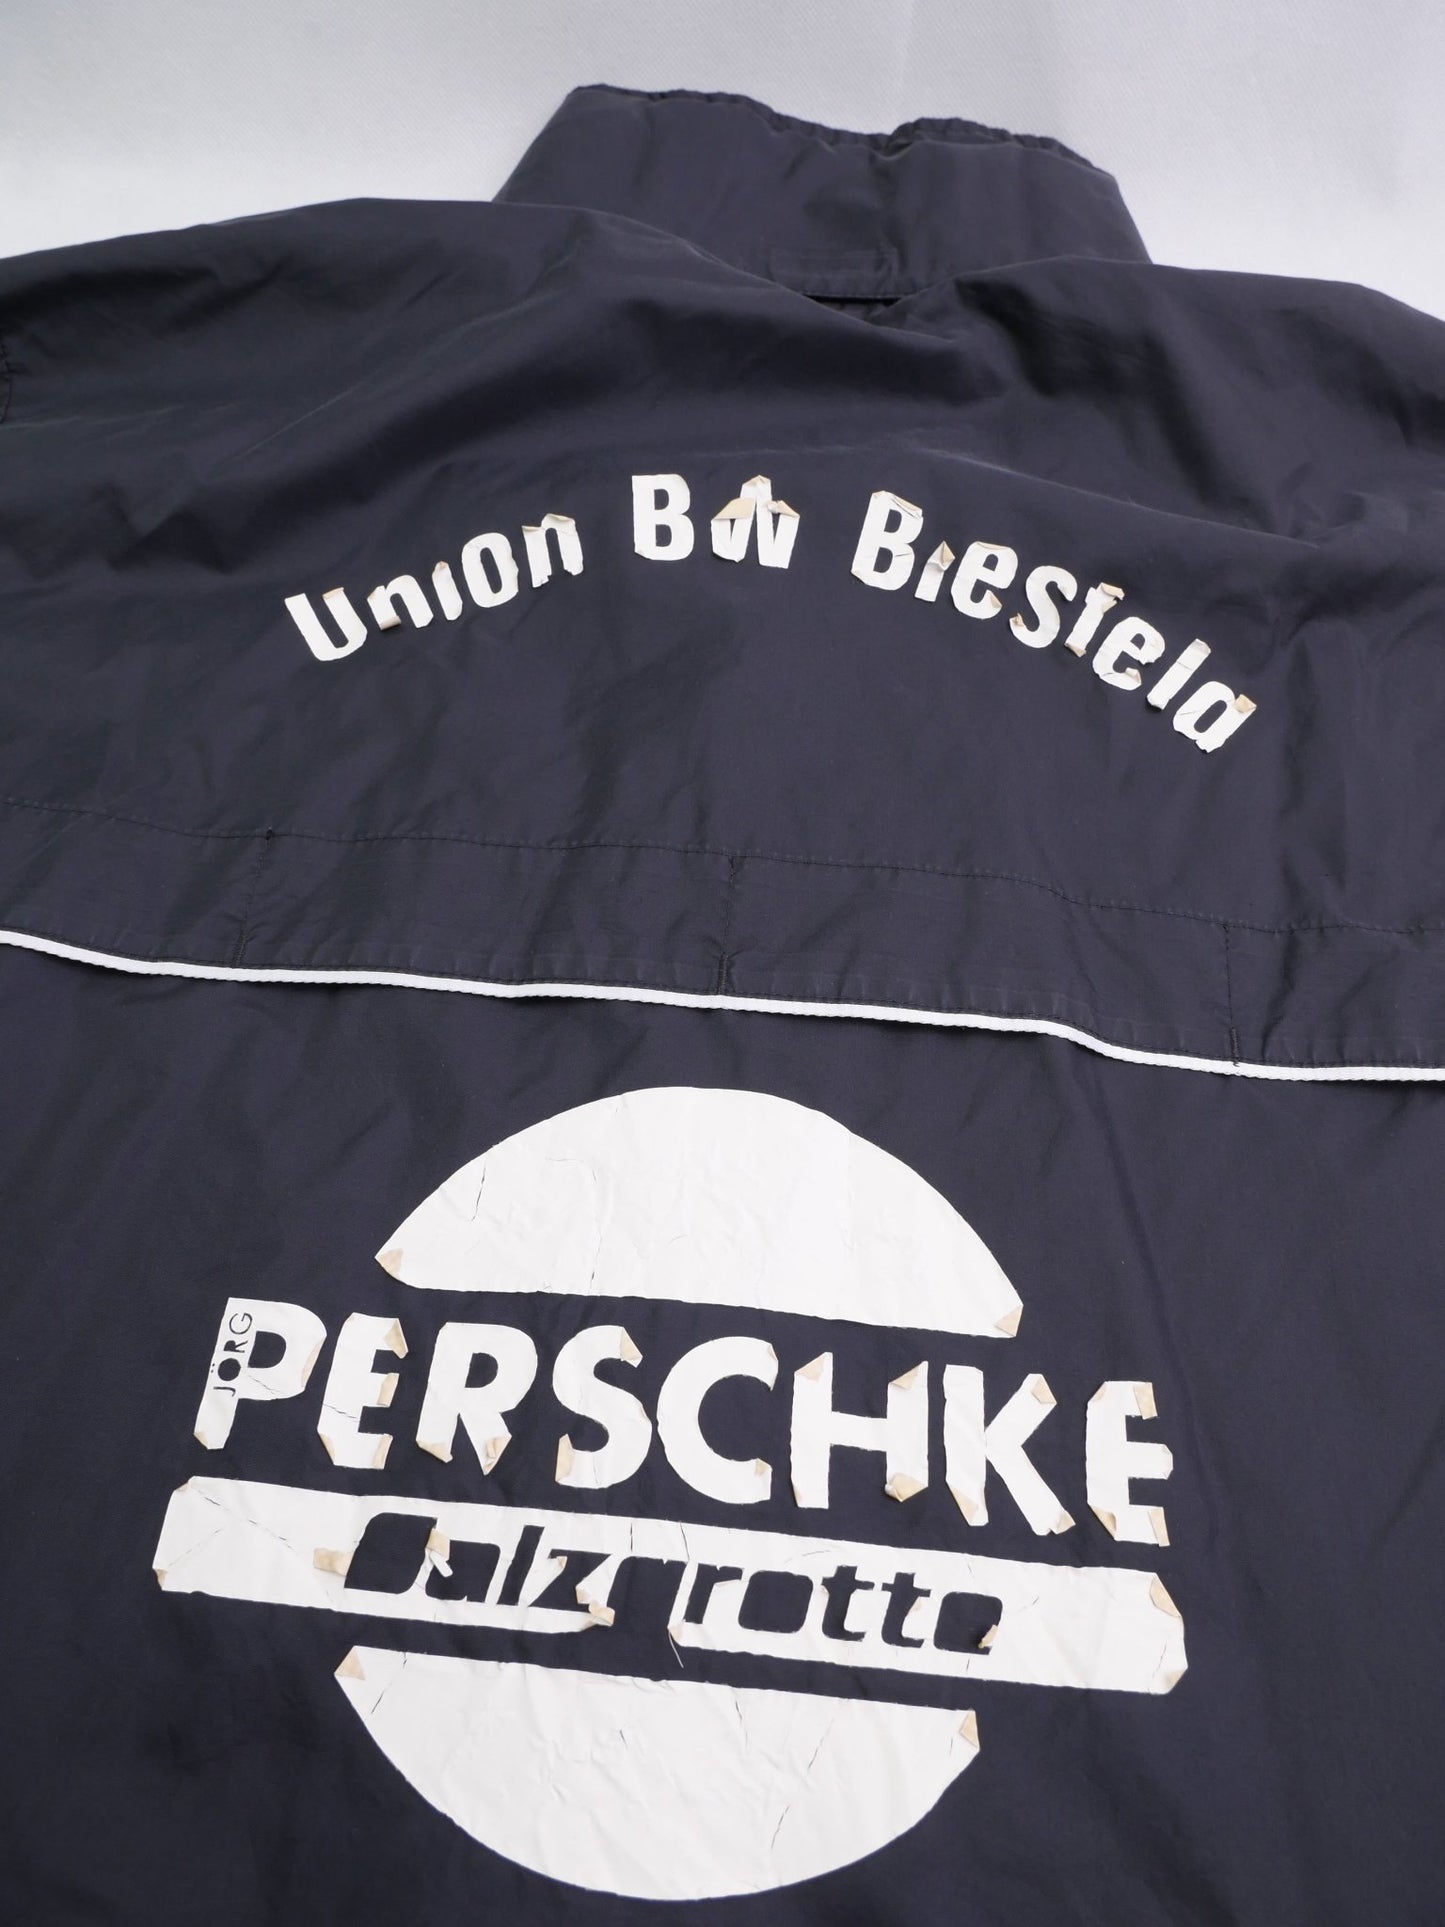 adidas Union BW Biestela printed Logo Track Jacket - Peeces